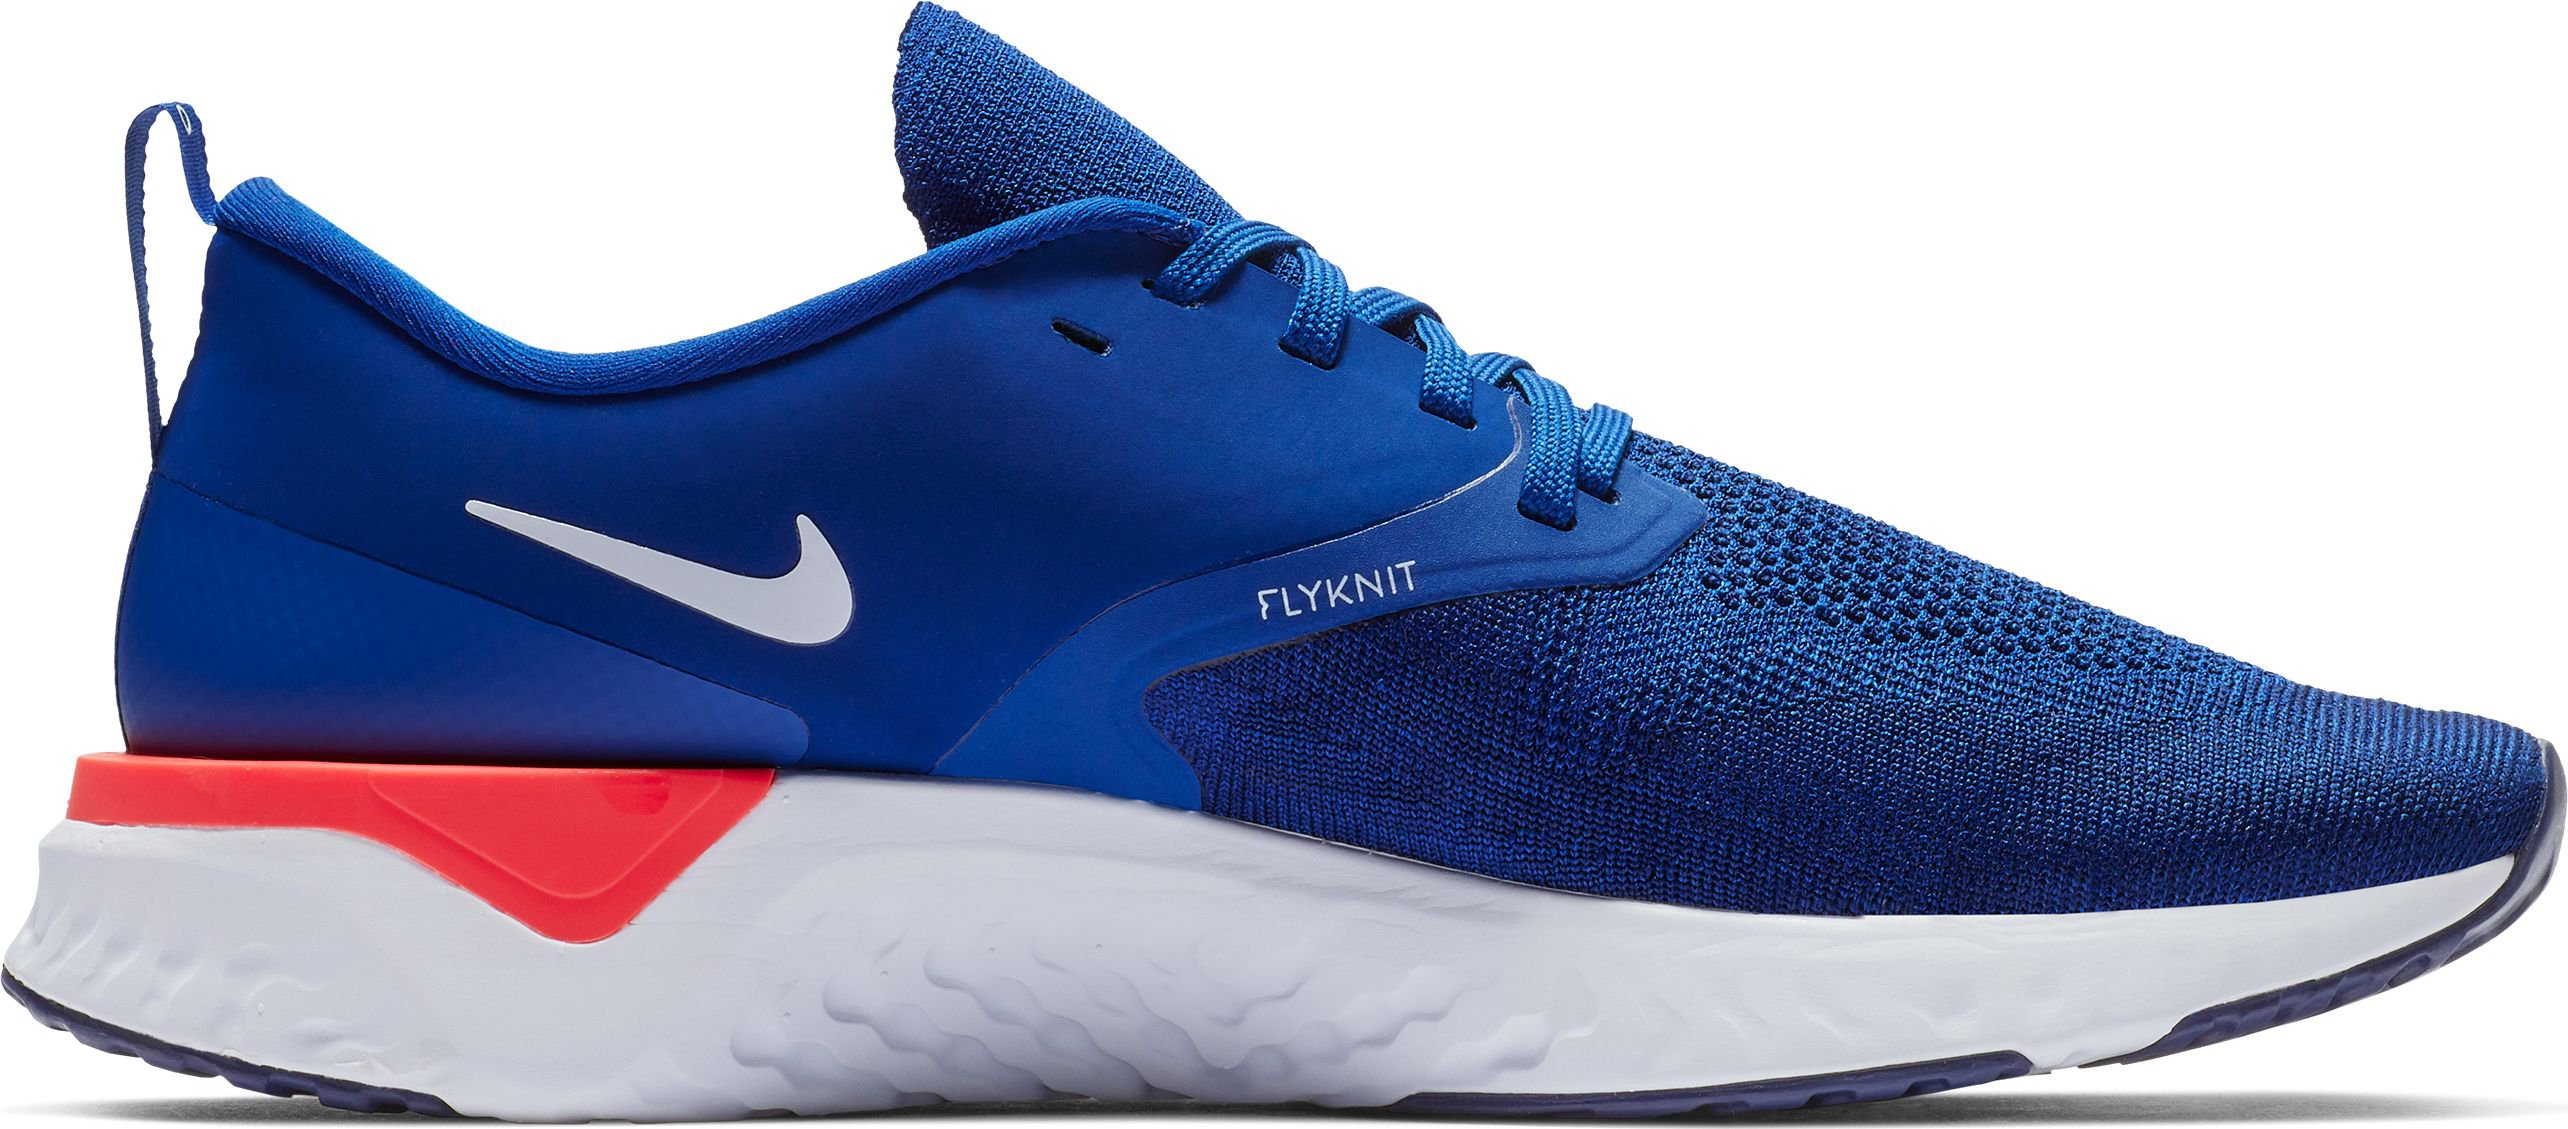 Nike obuv ODDYSSEY REACT 2 force/blue Velikost: 8.5